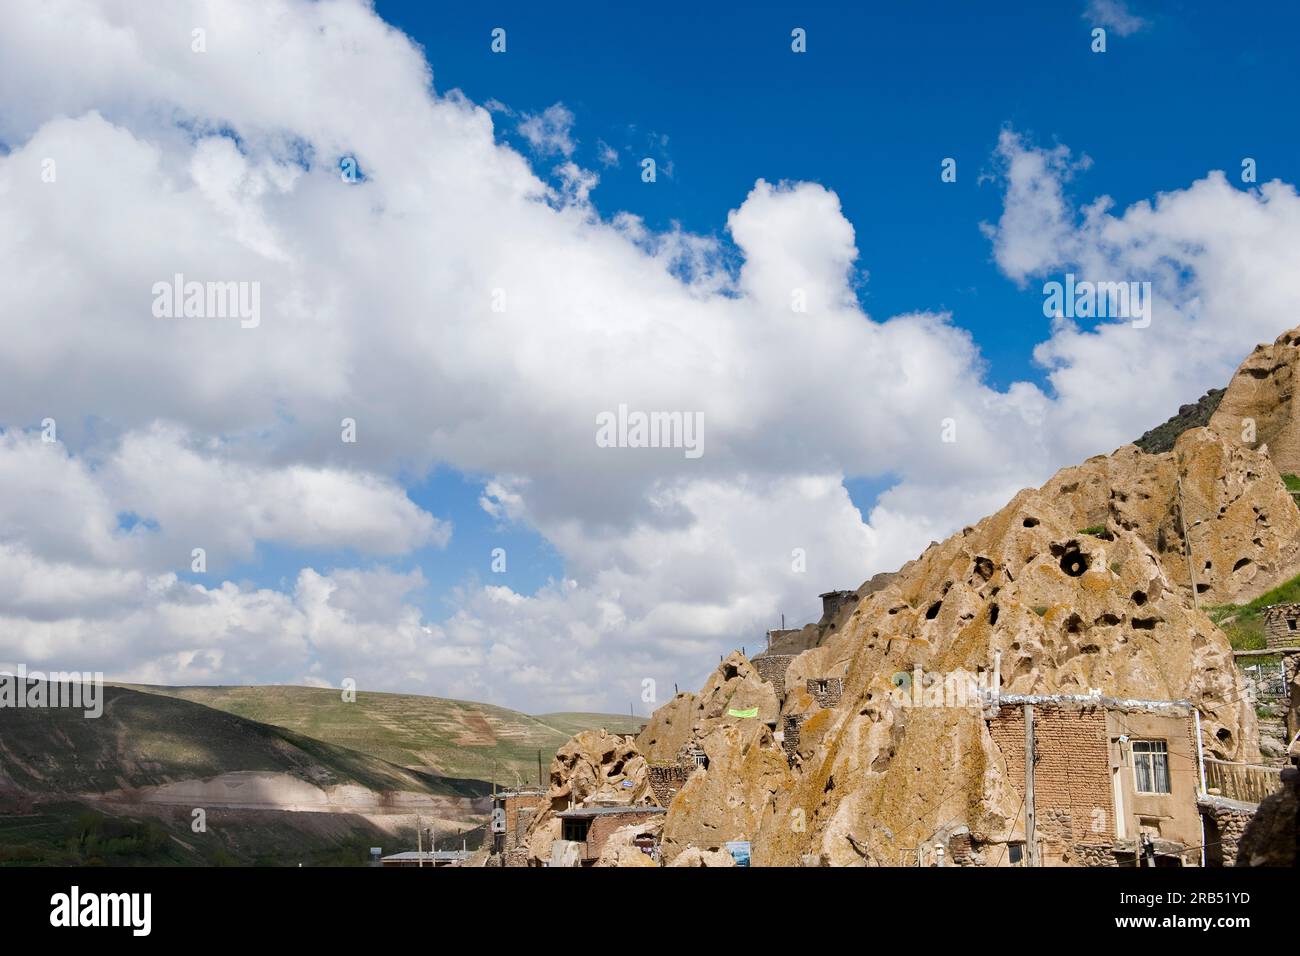 Iran. Azerbaijan region. Kandovan Stock Photo